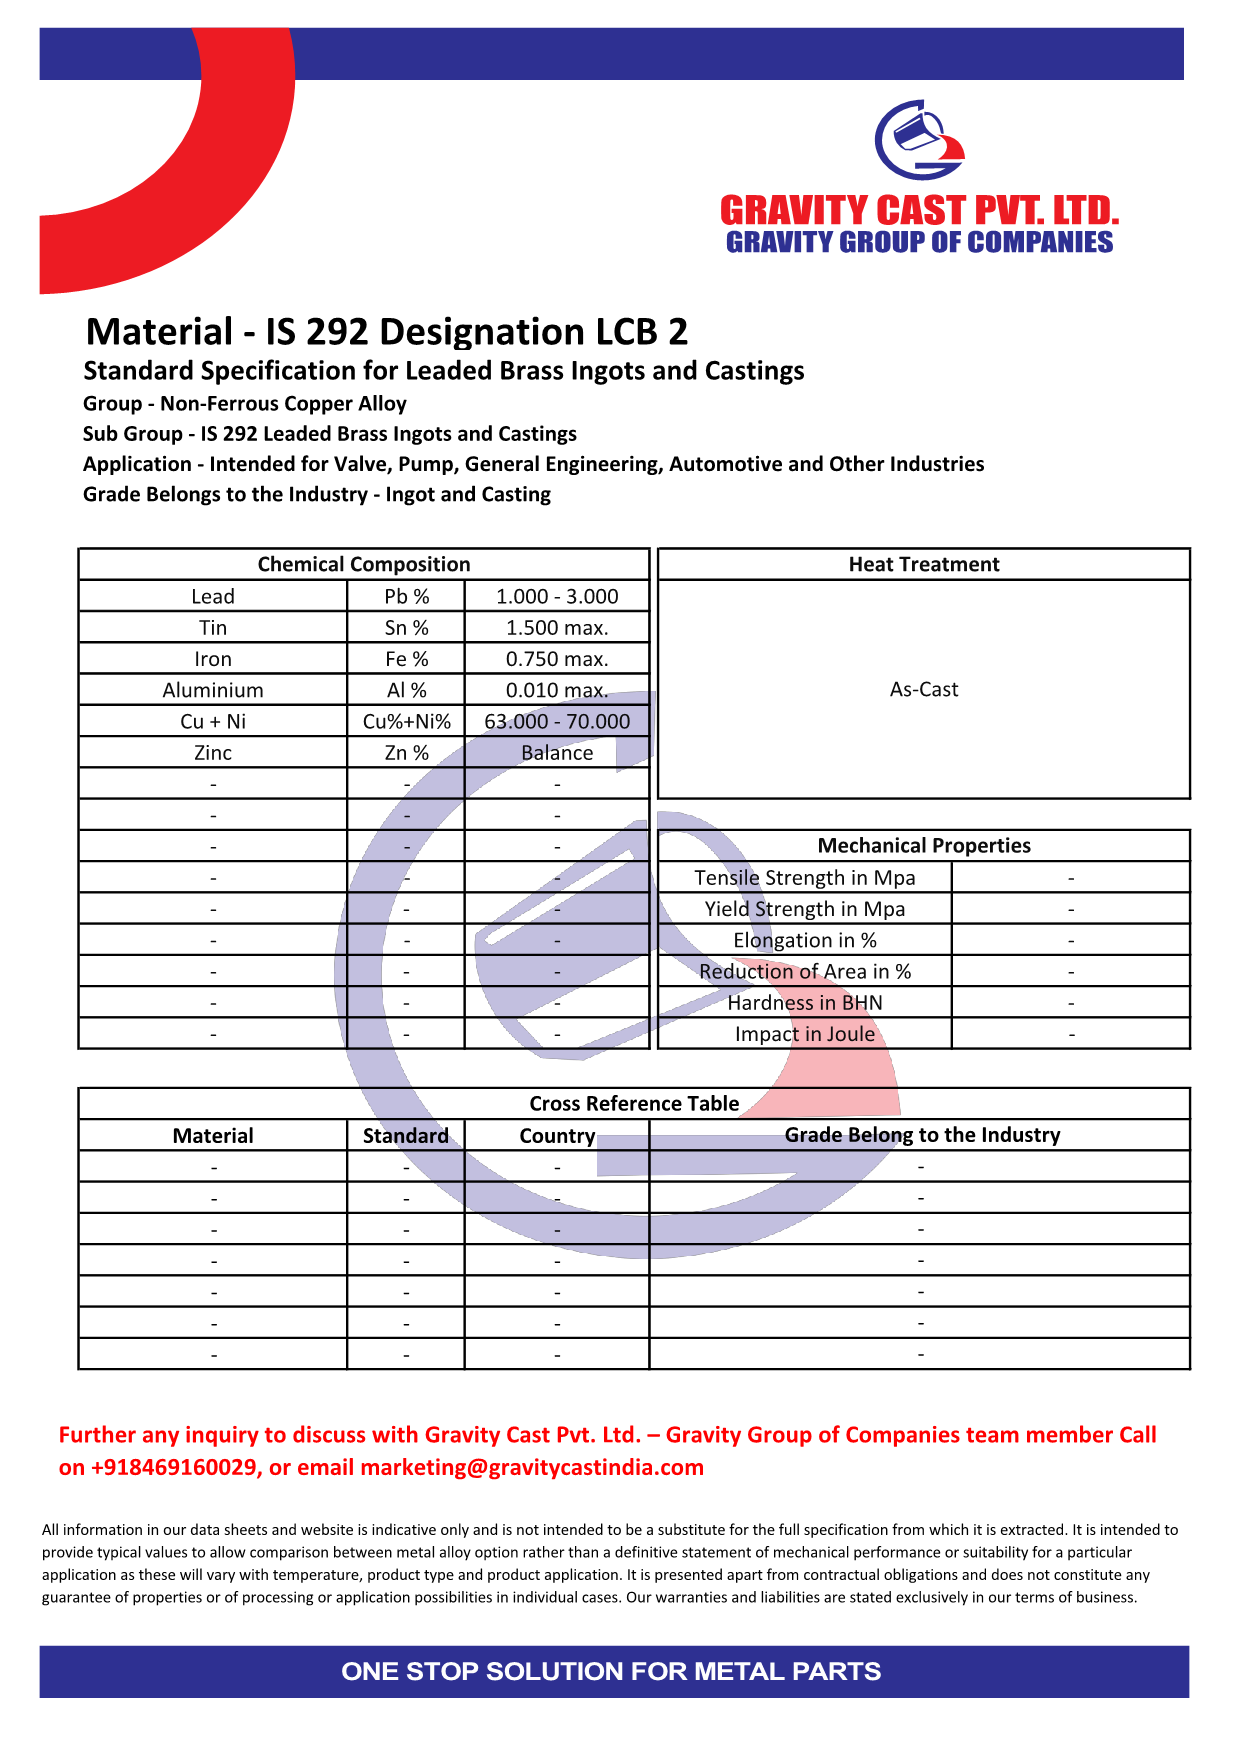 IS 292 Designation LCB 2.pdf